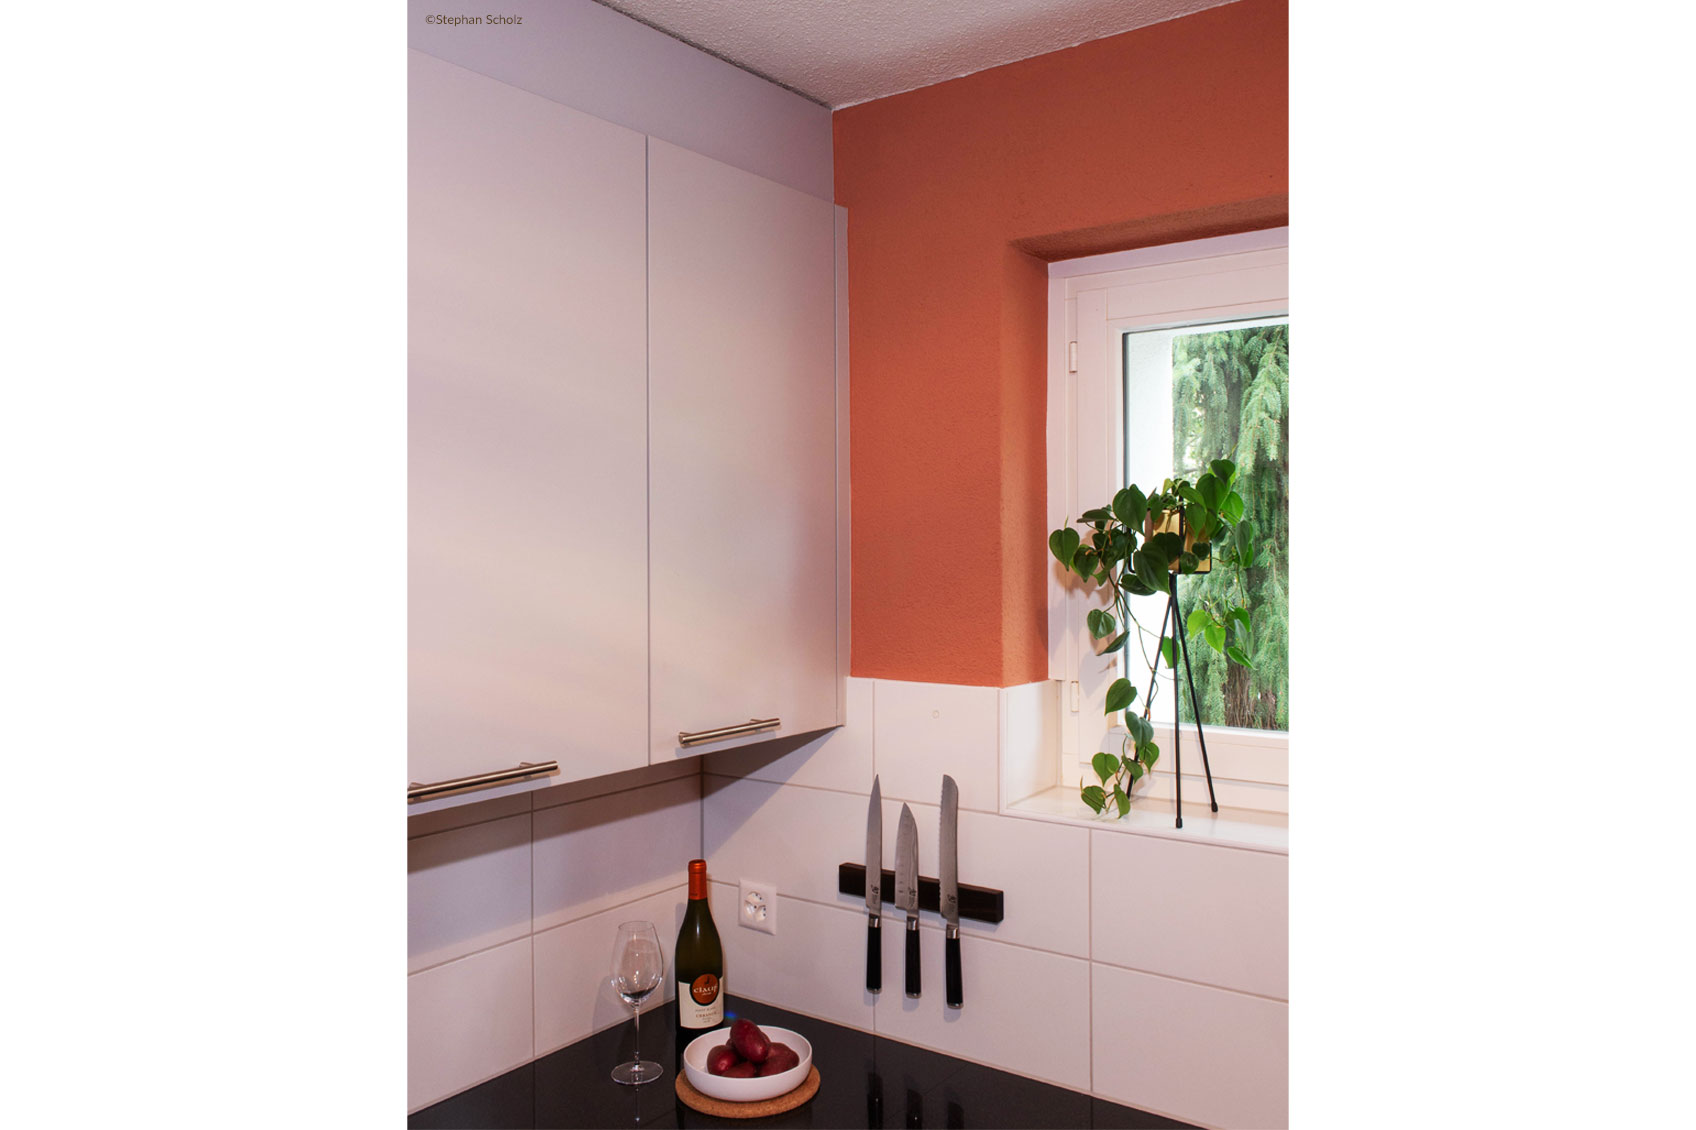 Le Corbusier Farbe in der Küche Photo Stephan Scholz